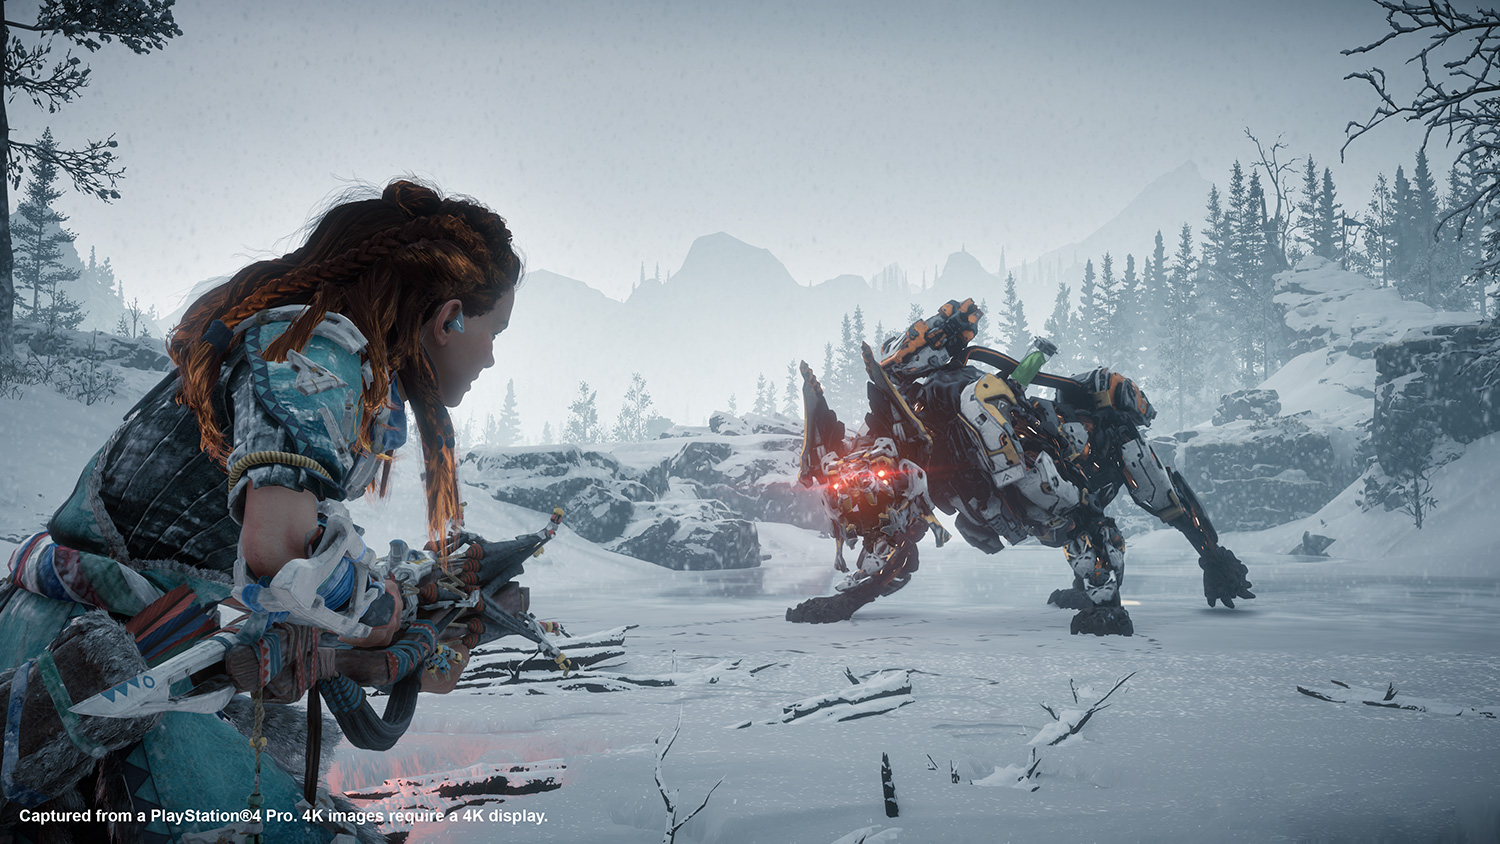 Horizon: Zero Dawn: The Frozen Wilds DLC Is 'Mid to End-Game In